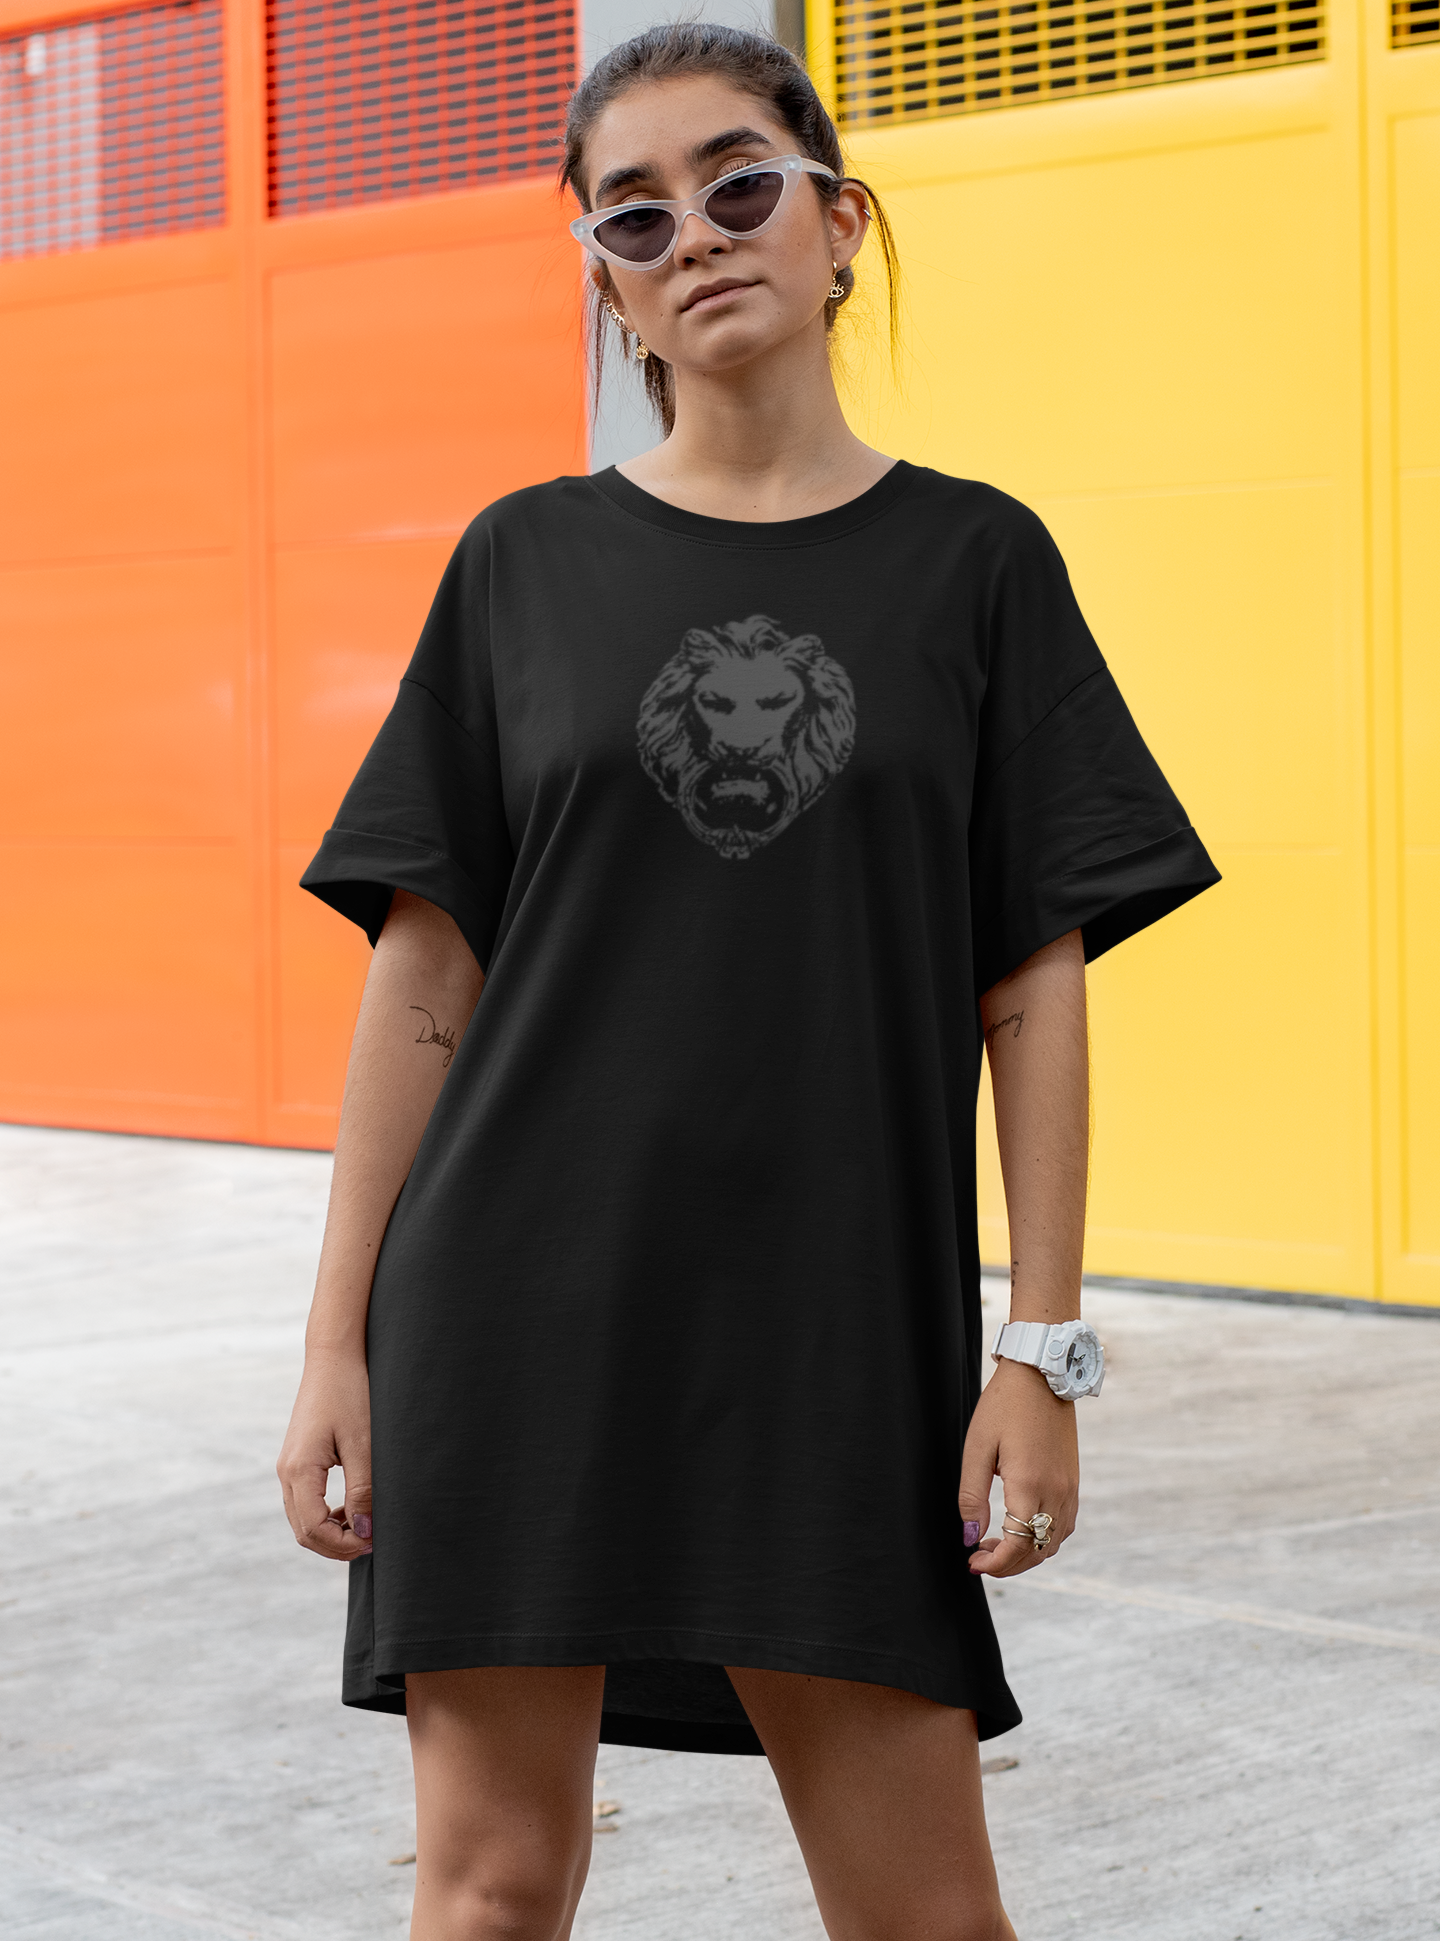 NFA-Streetwear-Black-lion-Womens-NoFixed-Abode-Lion-front-model-tshirt-dress-sunglasses